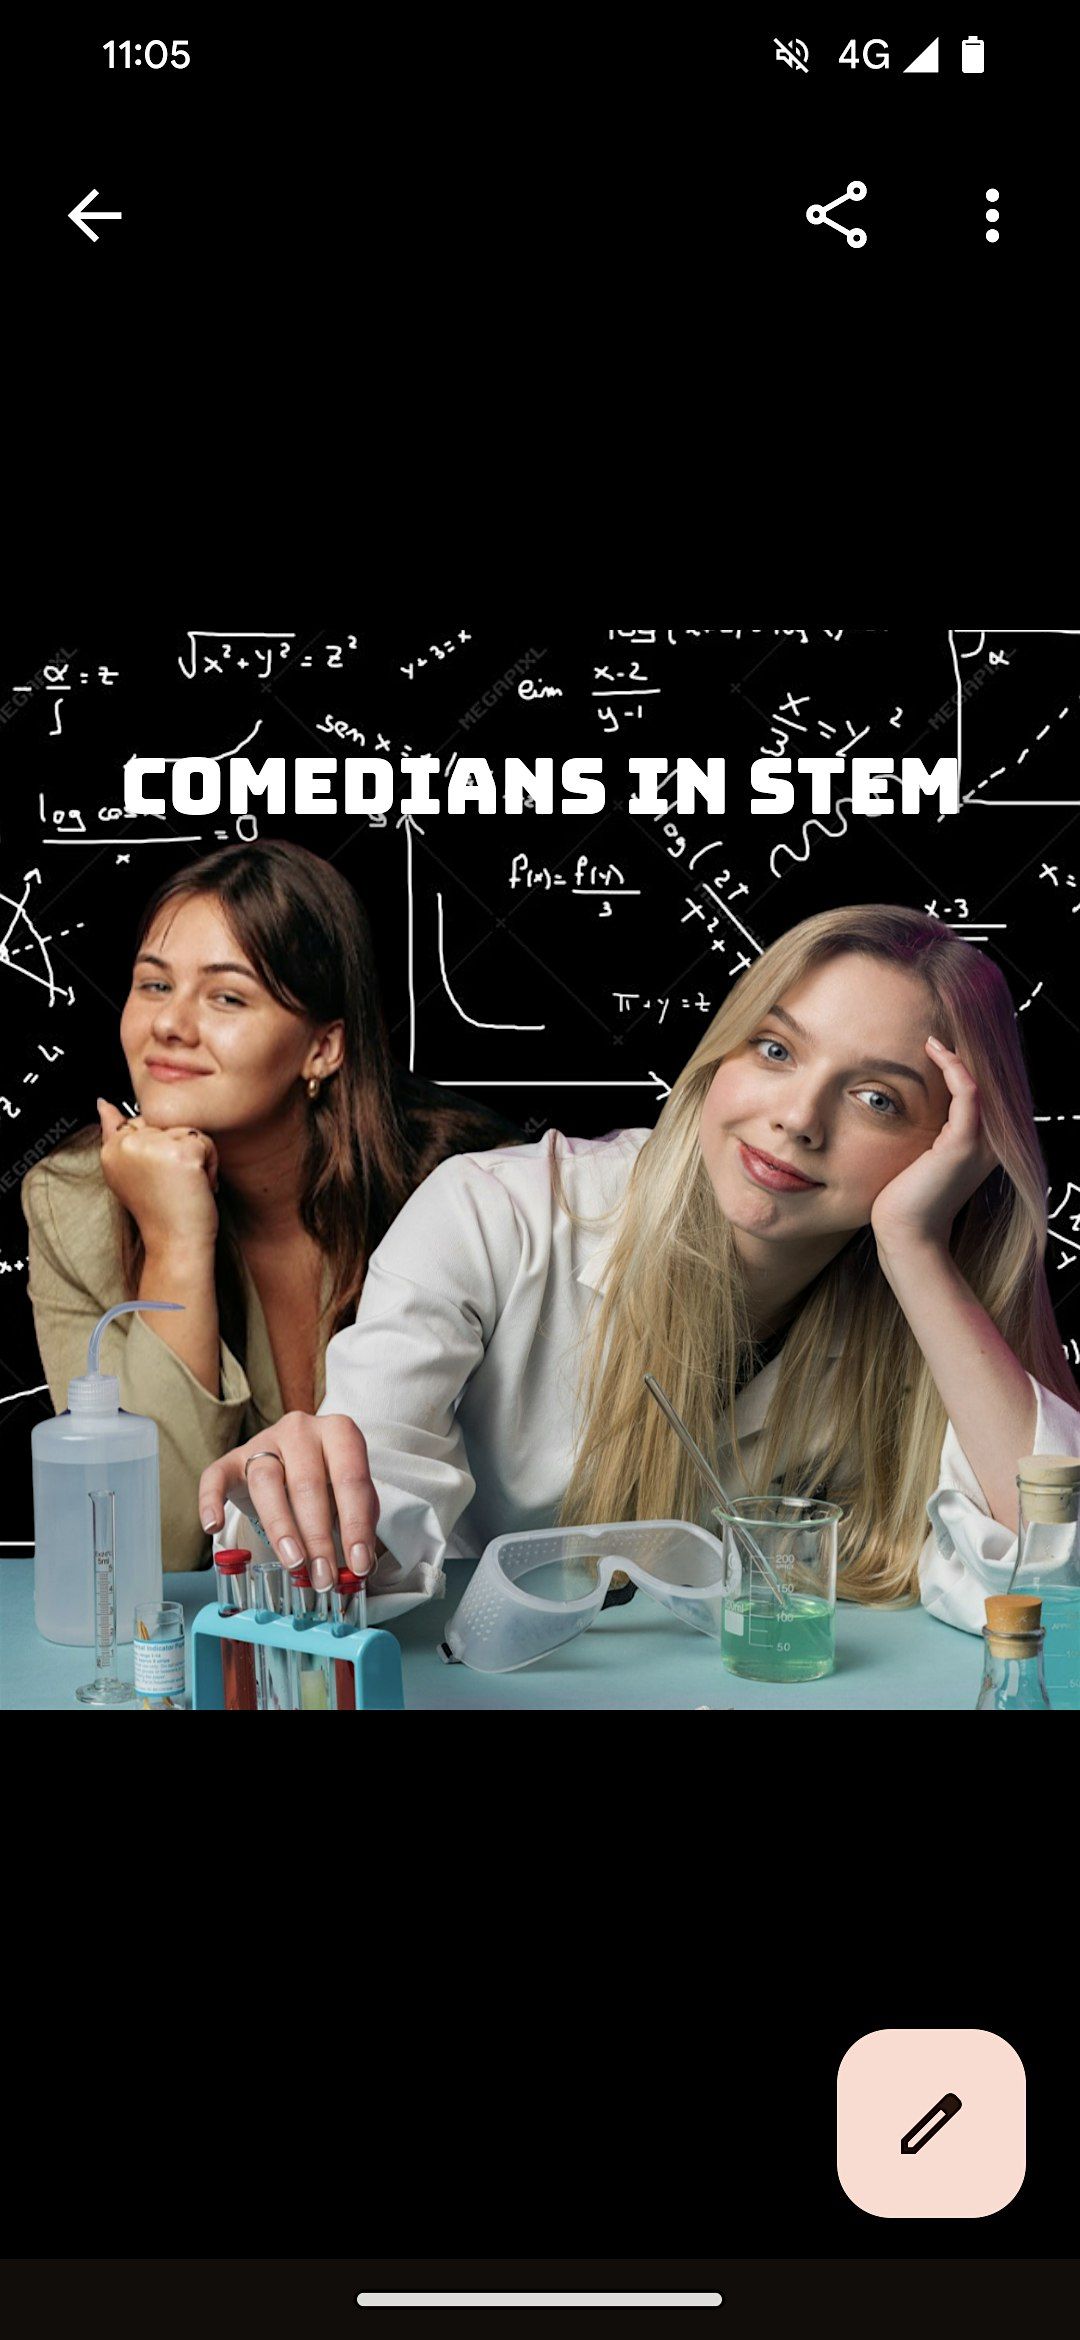 Comedians in STEM